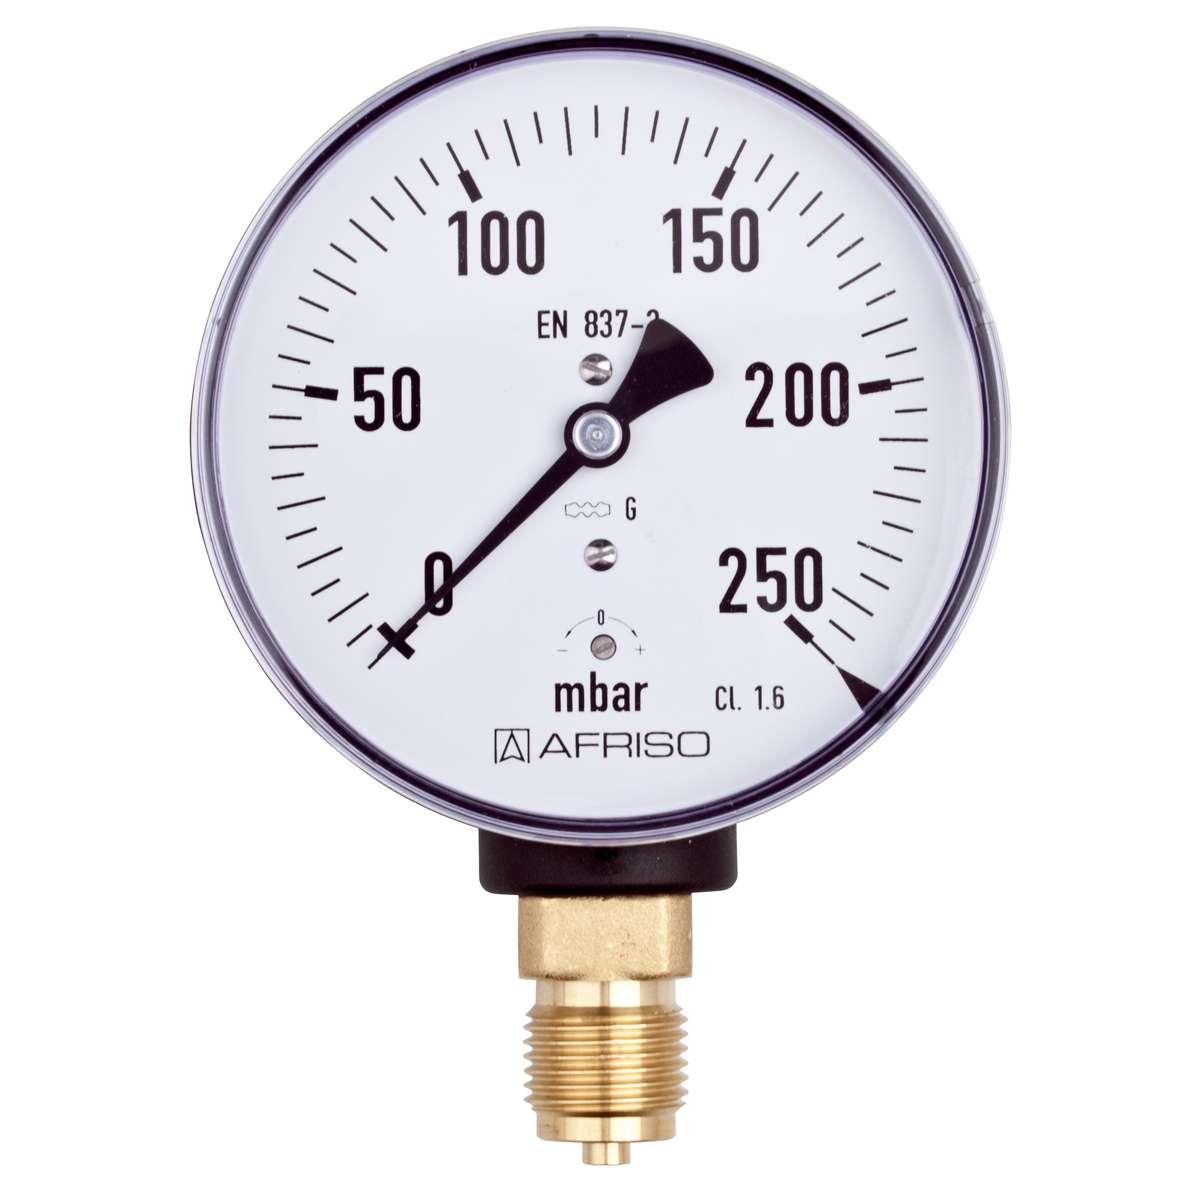 Manometr KP 100 pro plynná média, Ø 100 mm, 0 ÷ 160 mbar, G½", radiální, typ D2 - AFRISO.CZ